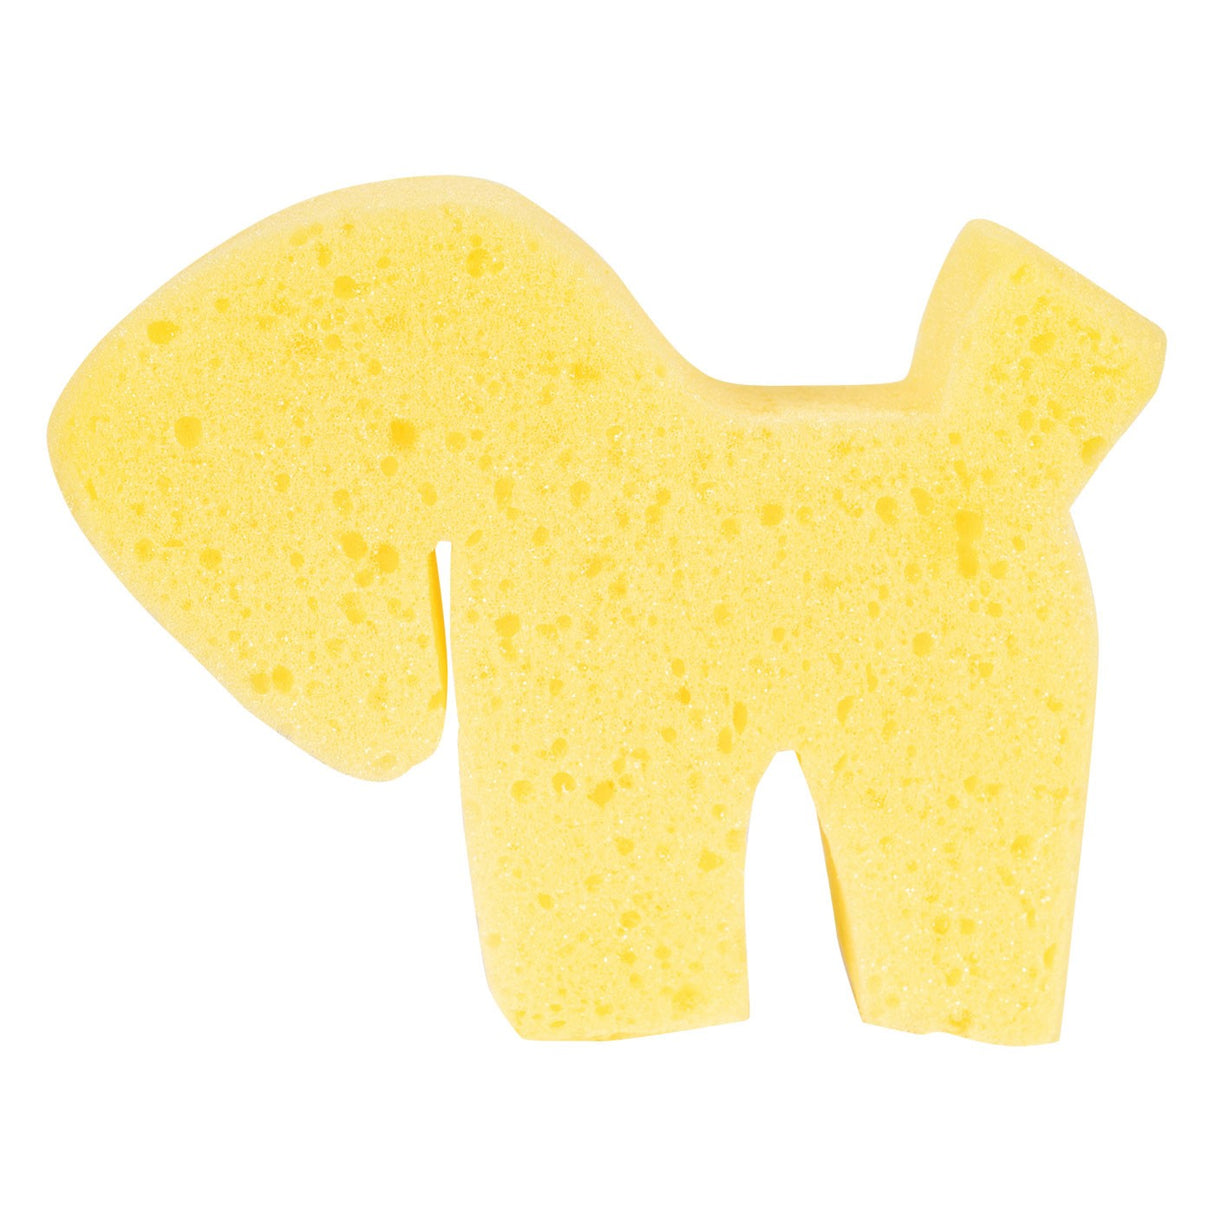 Hippo-Tonic Horse shaped sponge - braiding & grooming - PADD